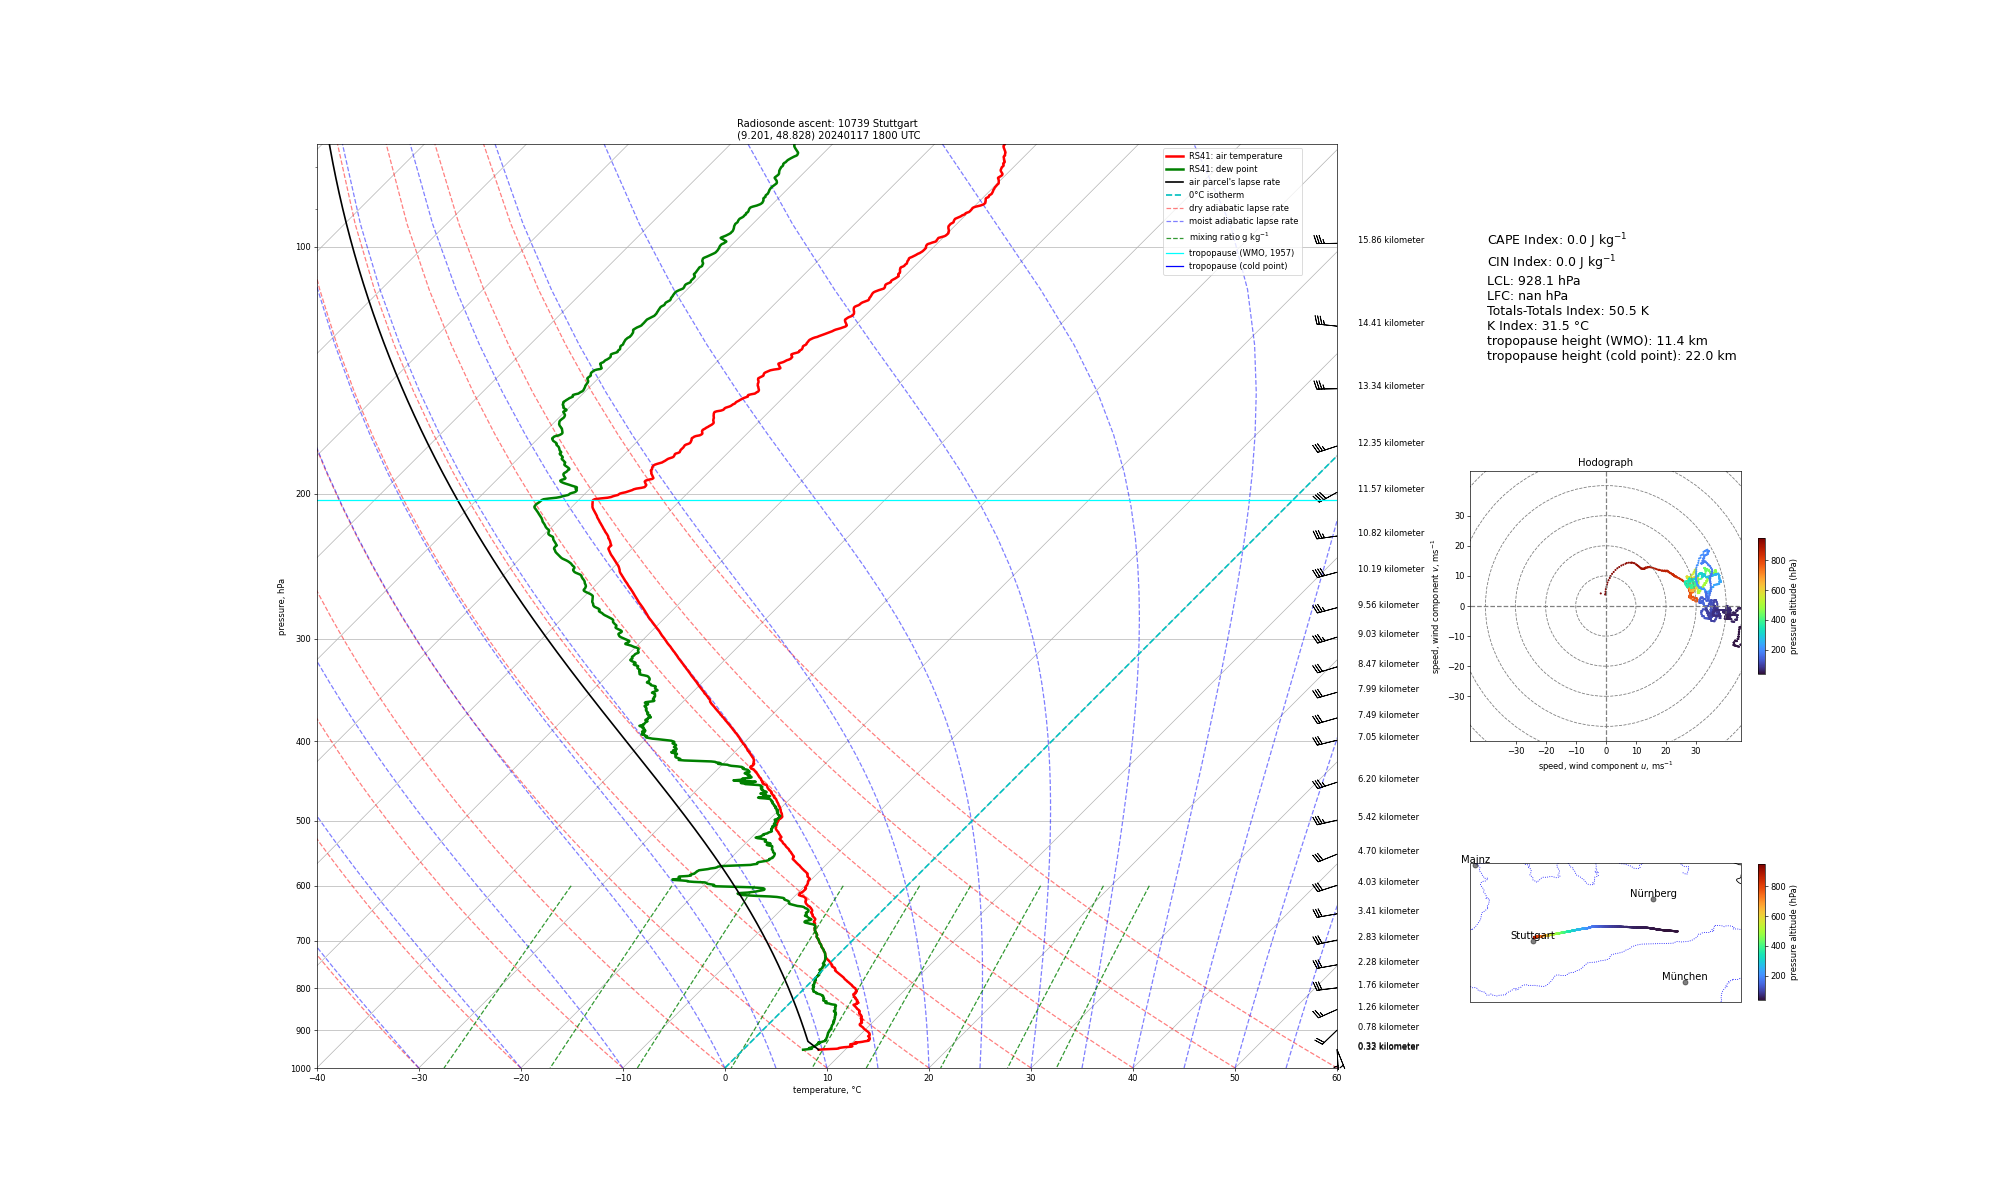 Visualisation of the radiosounding profile at Stuttgart at 1800 UTC